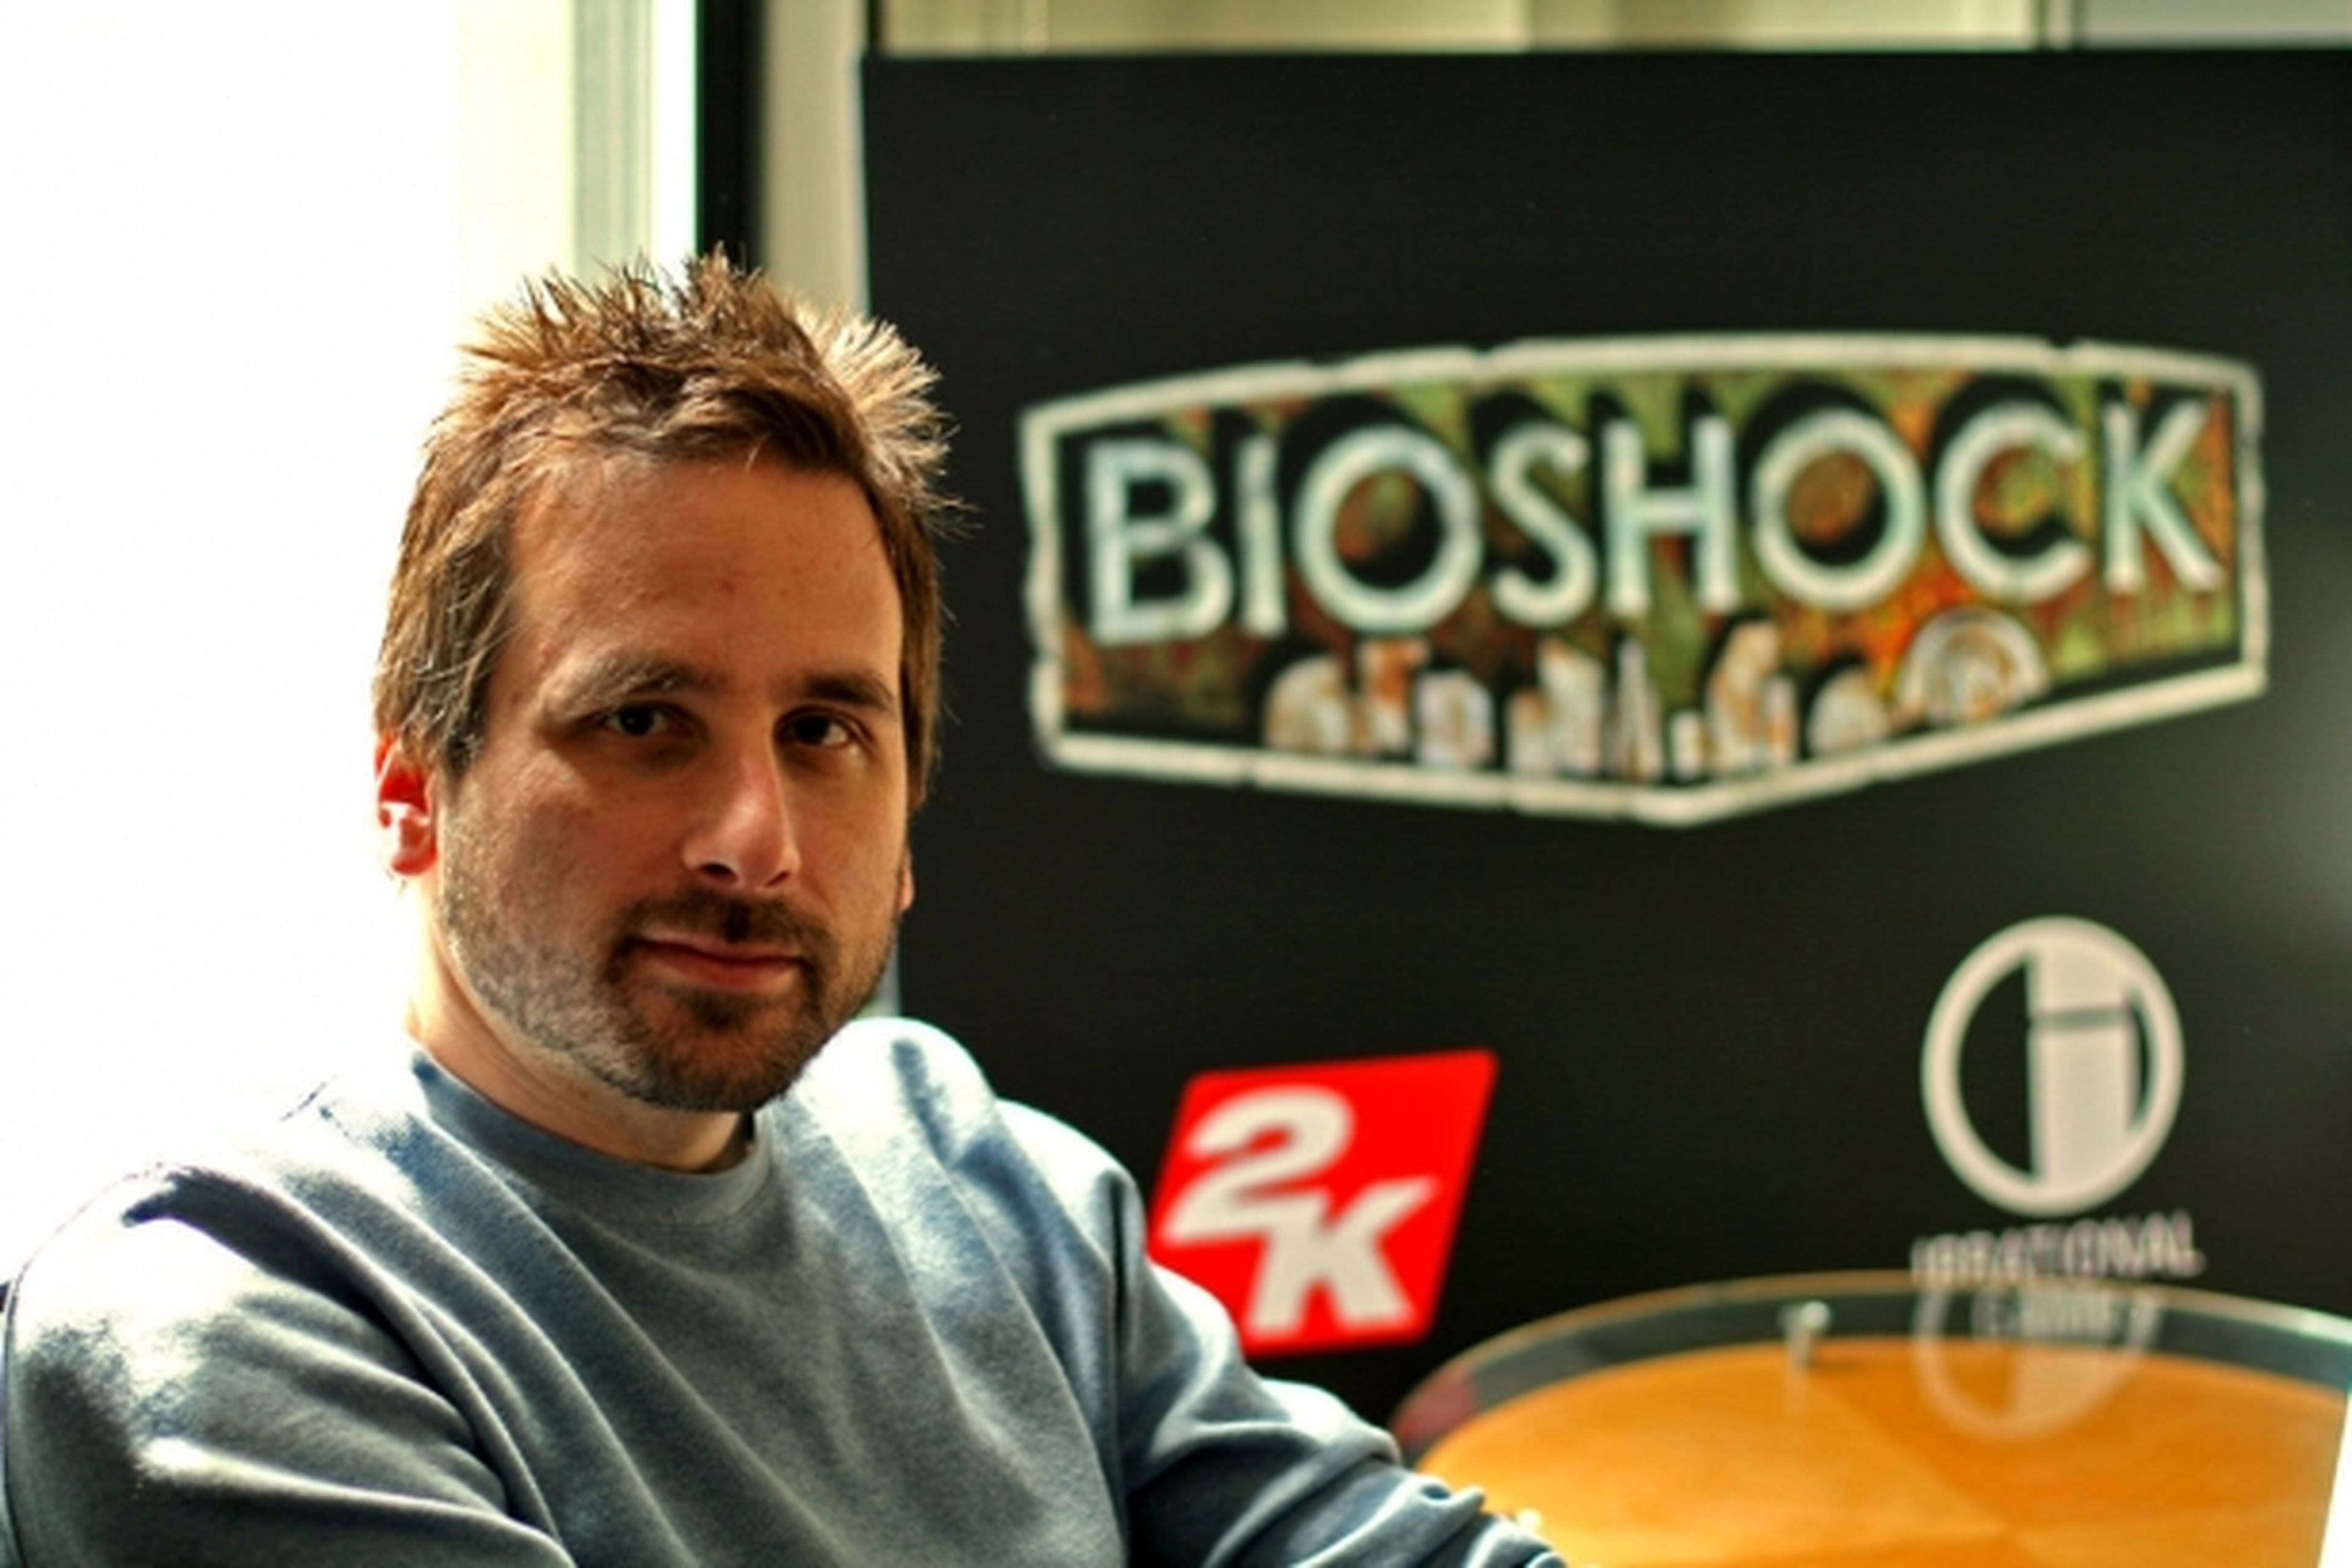 Nuevo premio para Ken Levine, de Bioshock